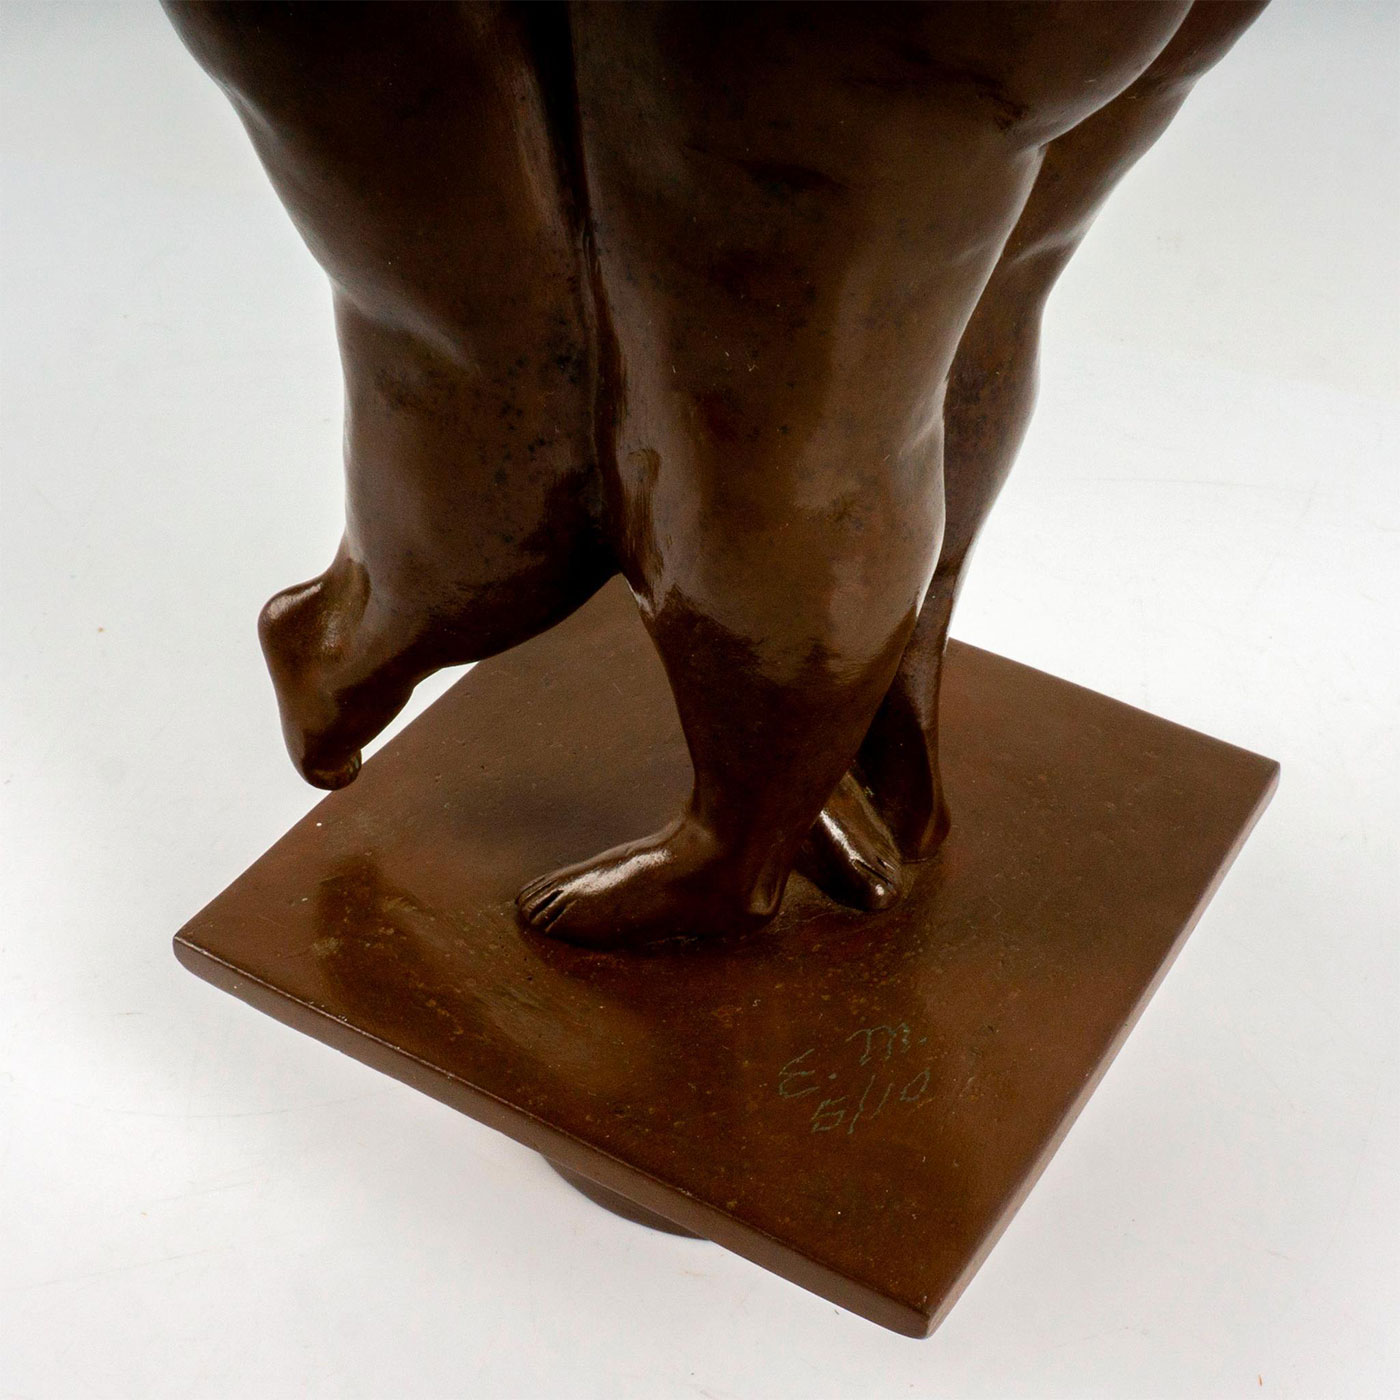 Artist Signed Limited Edition Modern Bronze Sculpture - Image 2 of 4